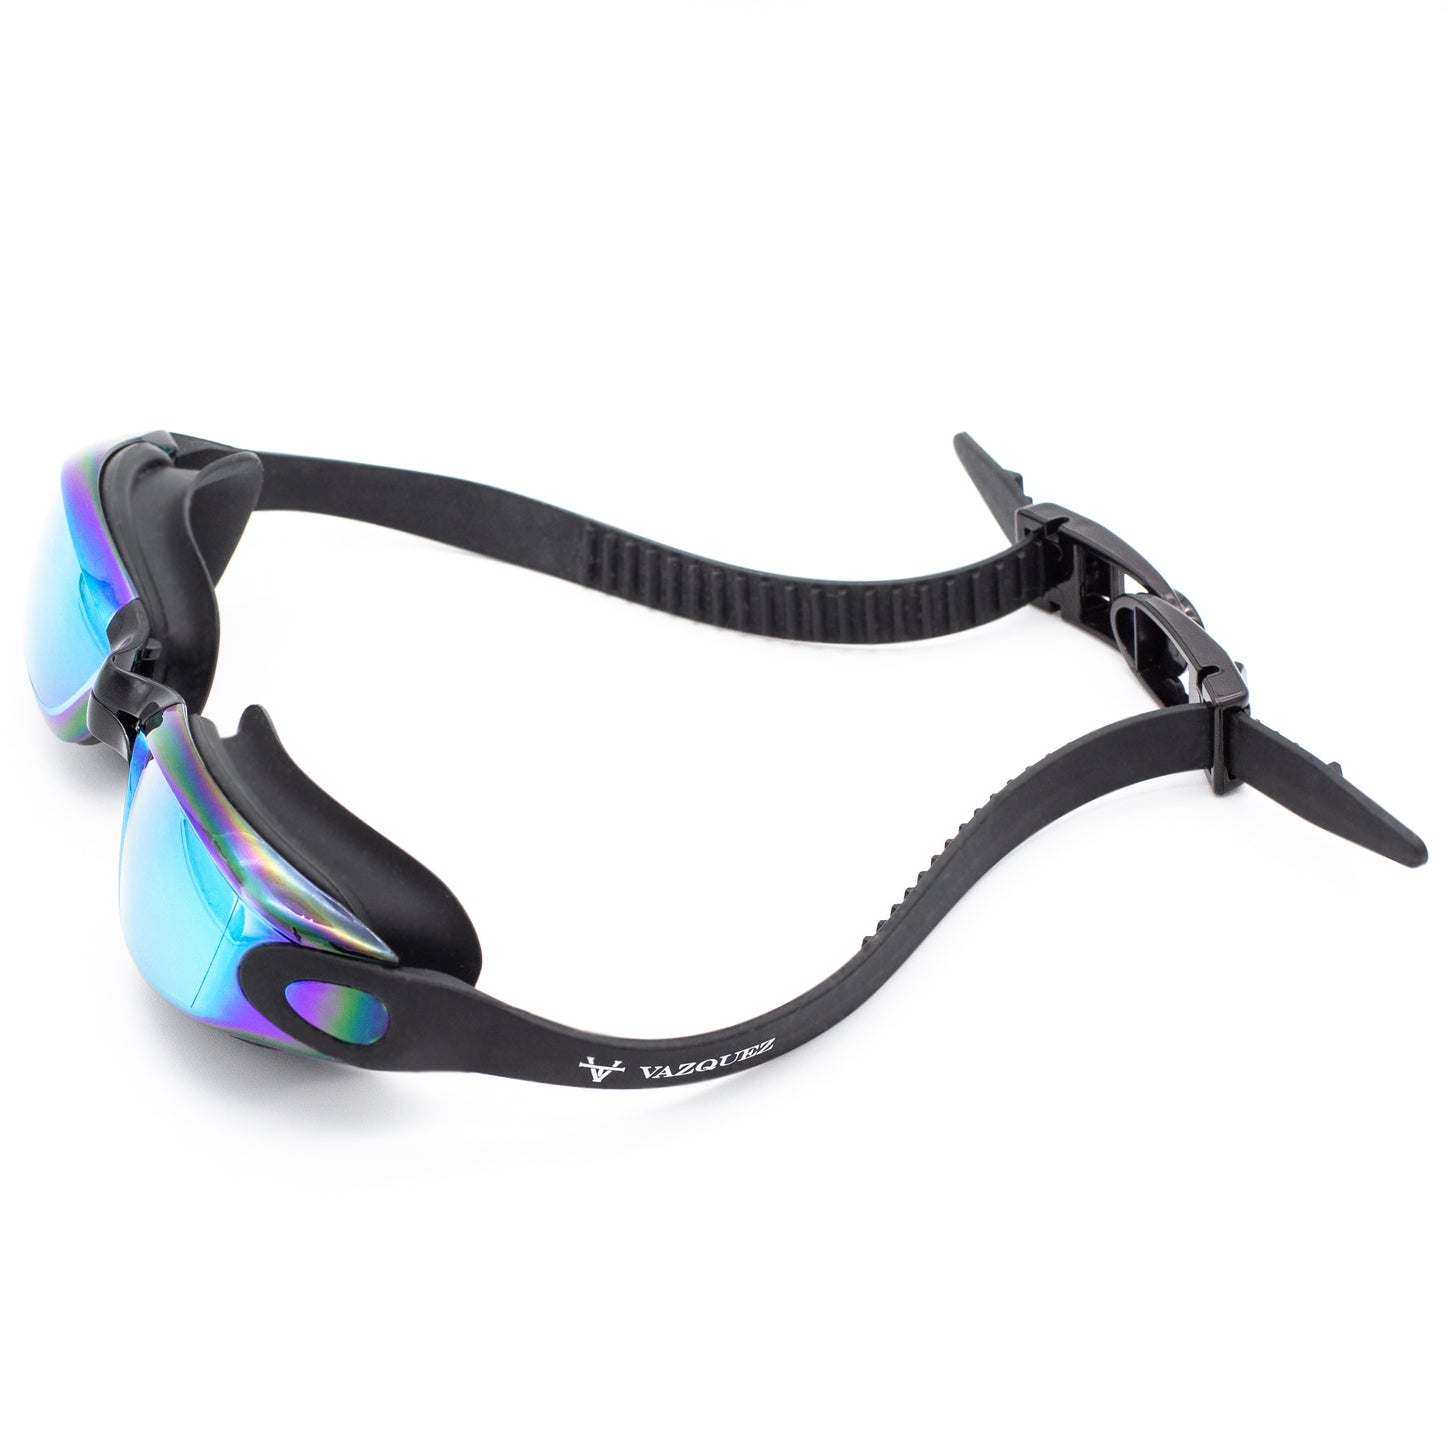 Vazquez NeroNautica Black Adult Swimming Goggles - High-Performance Affordable Cheap Swim Goggles